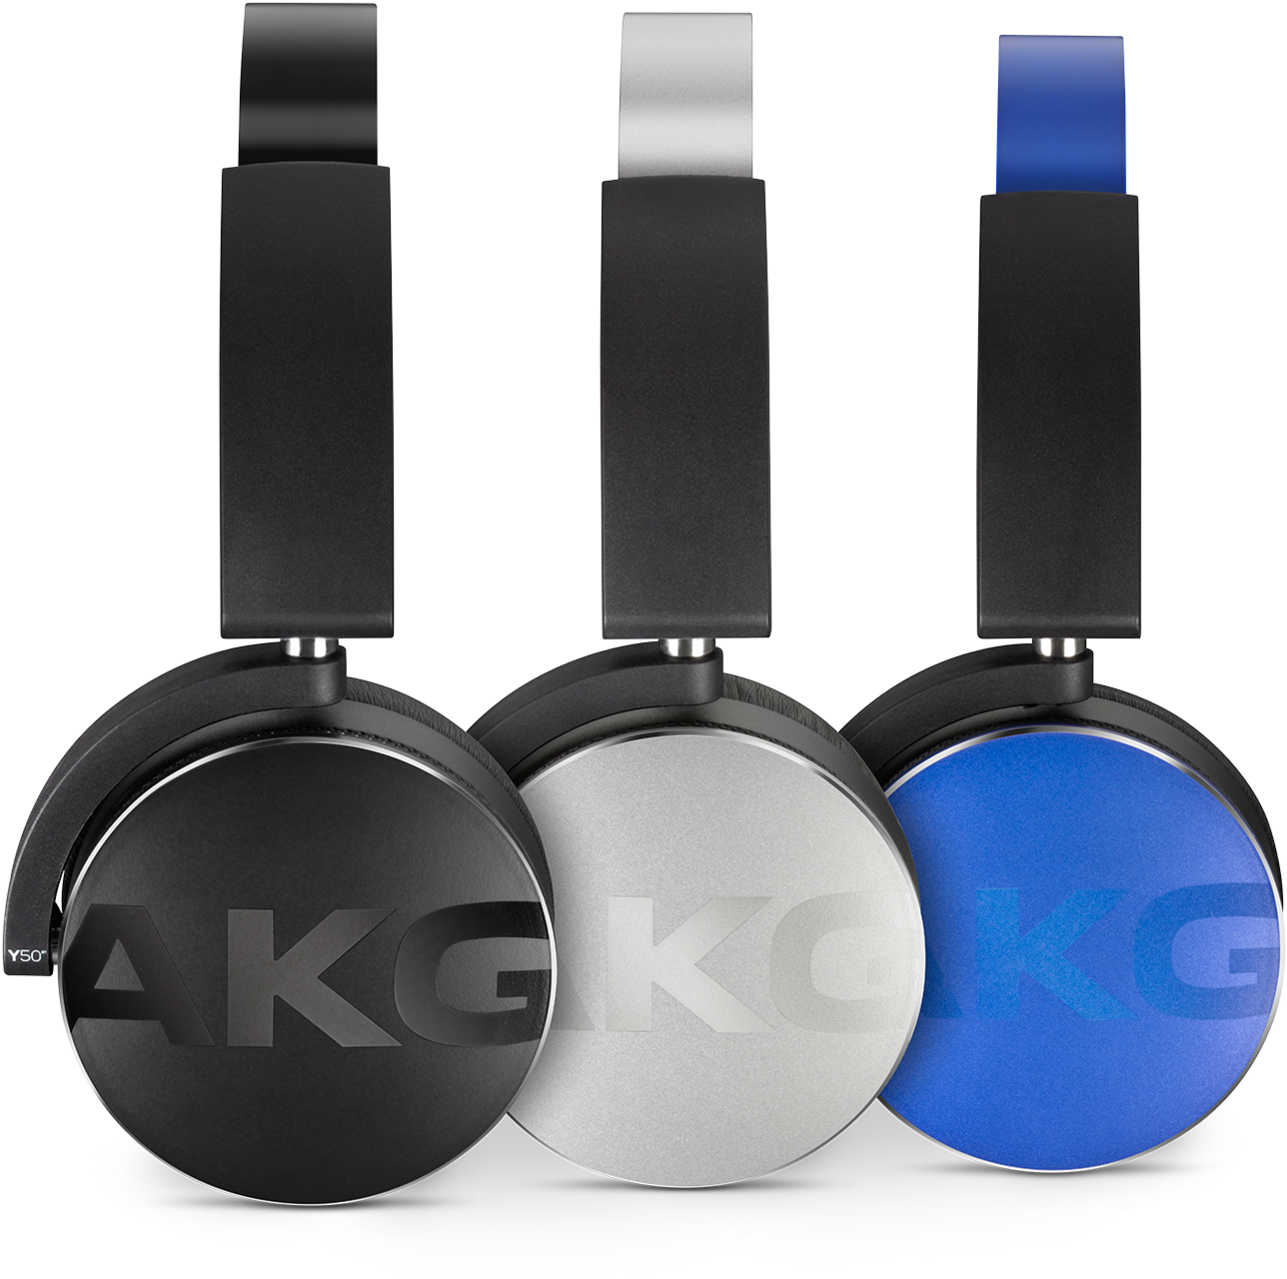 Y50bt - Akg Y50bt Bluetooth Wireless On-ear Headphones (1605x1605), Png Download